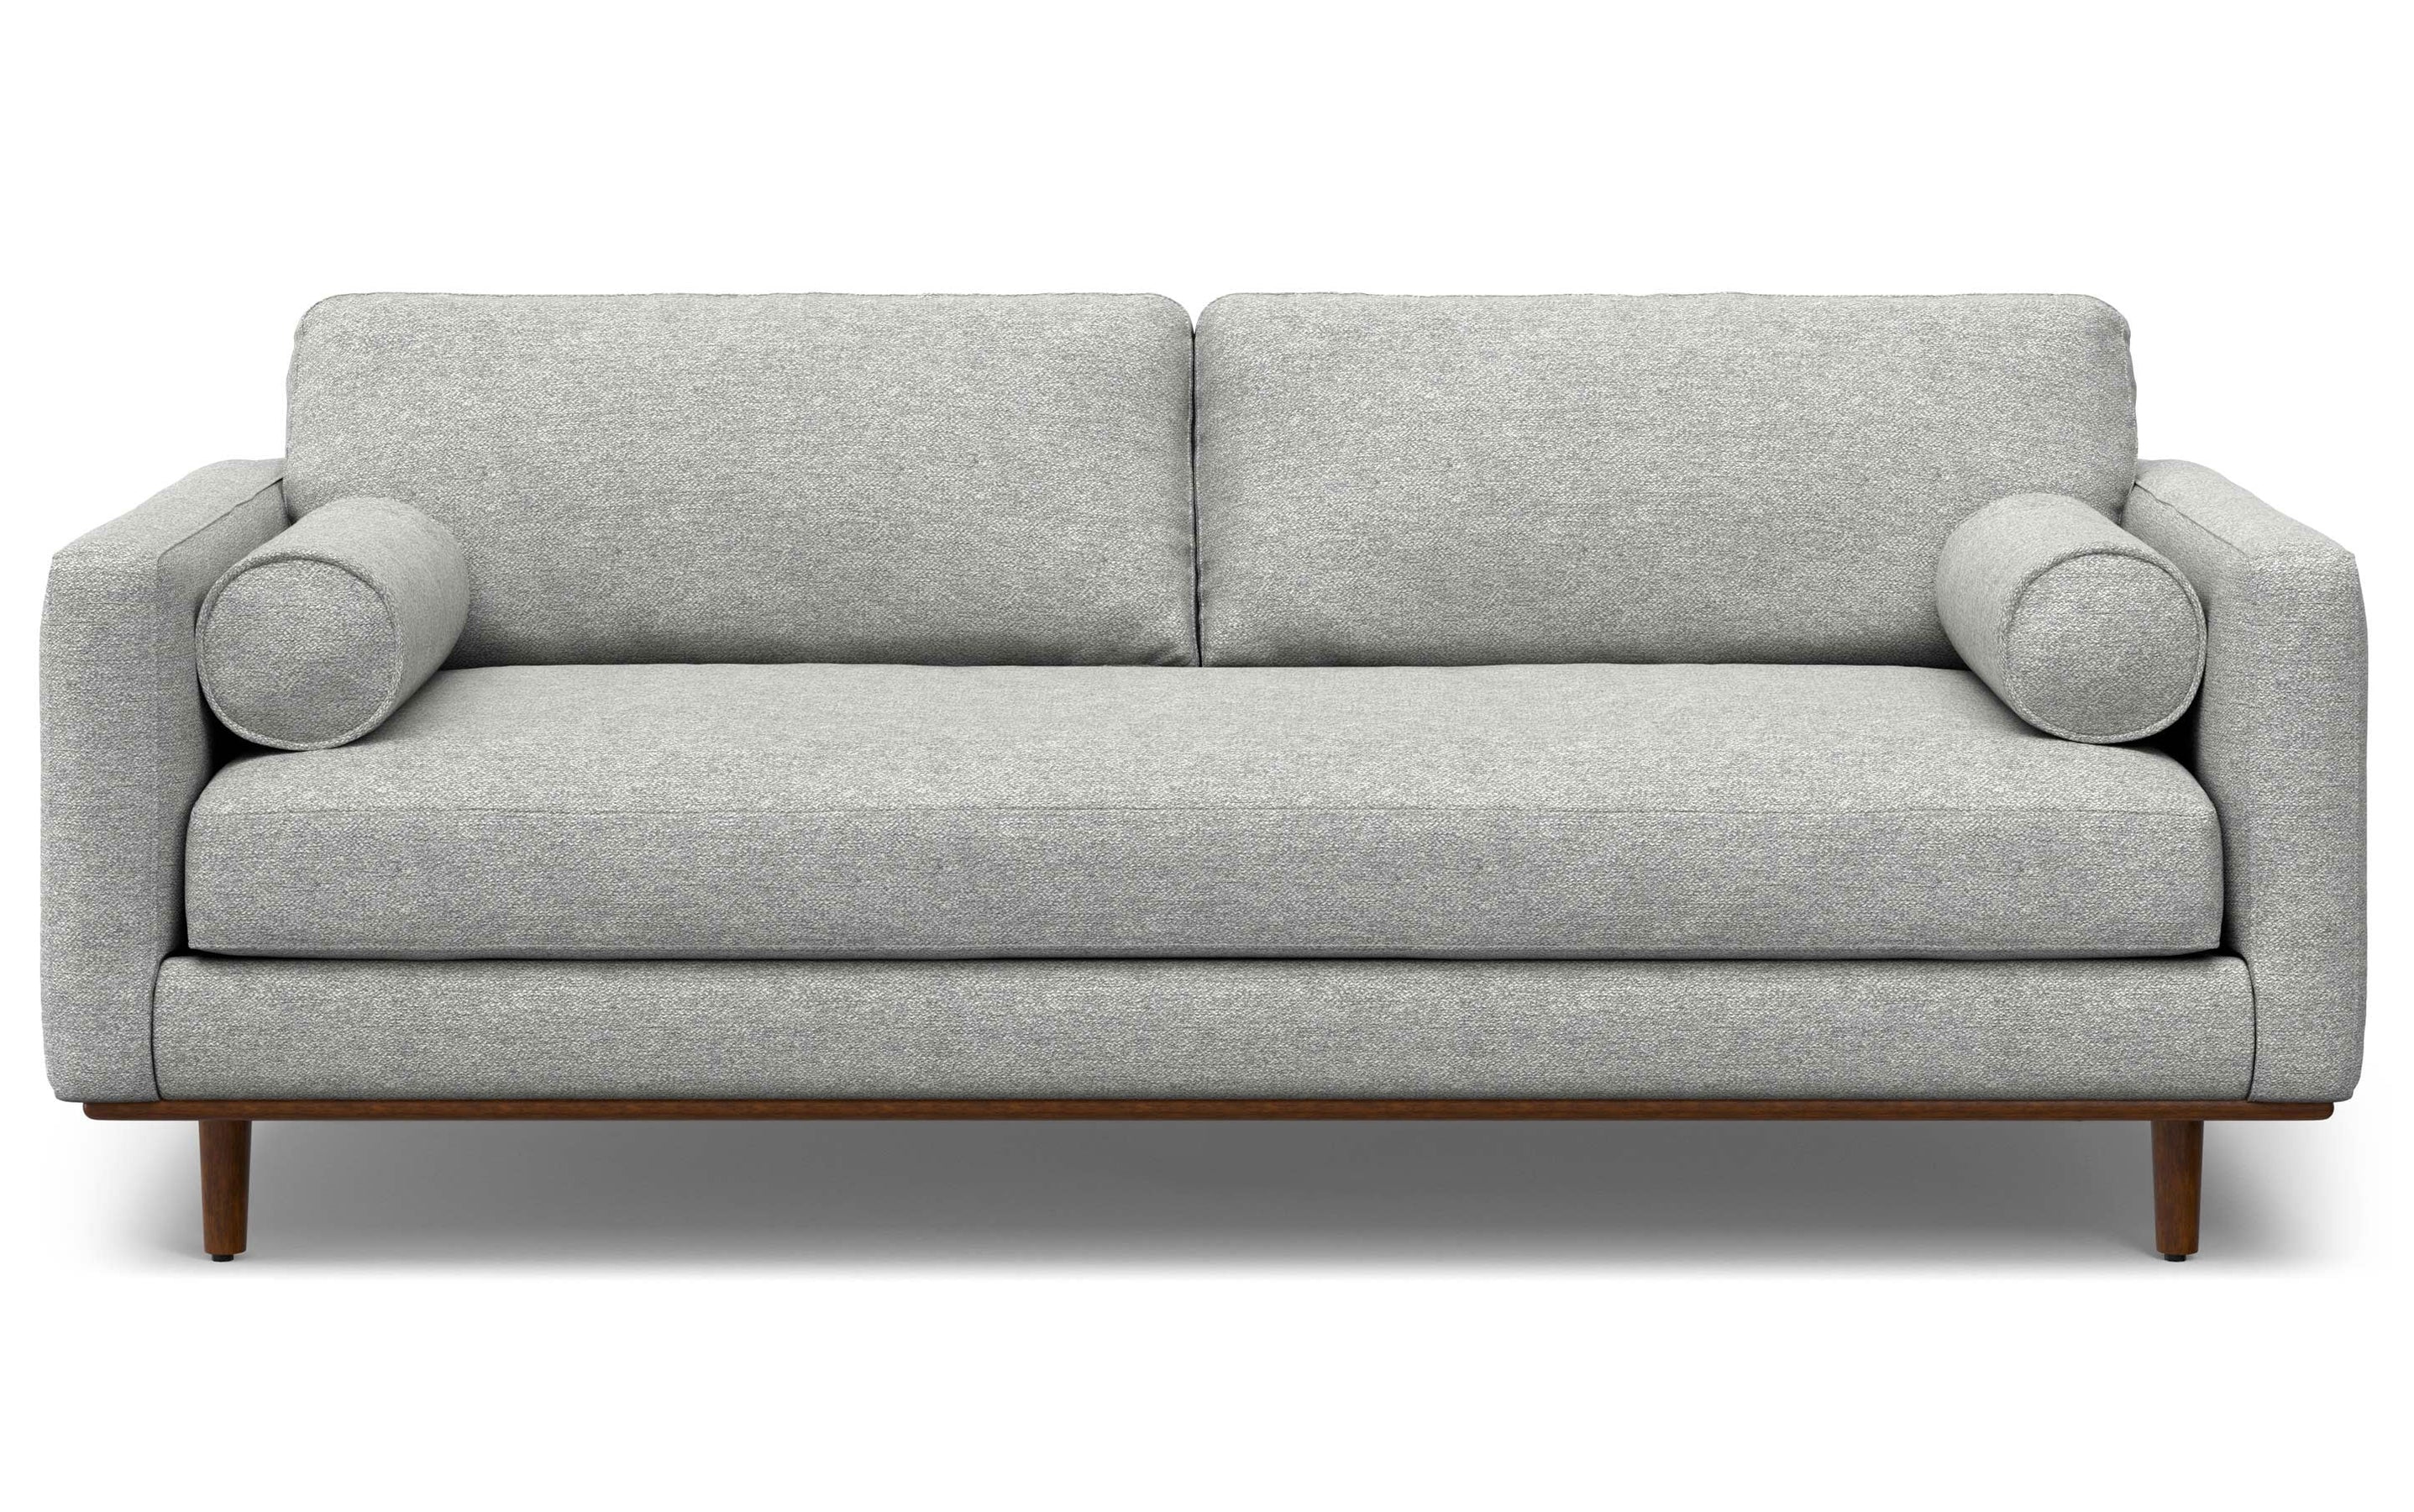 Mist Grey Woven-Blend Fabric | Morrison 88.5 inch Mid Century Sofa